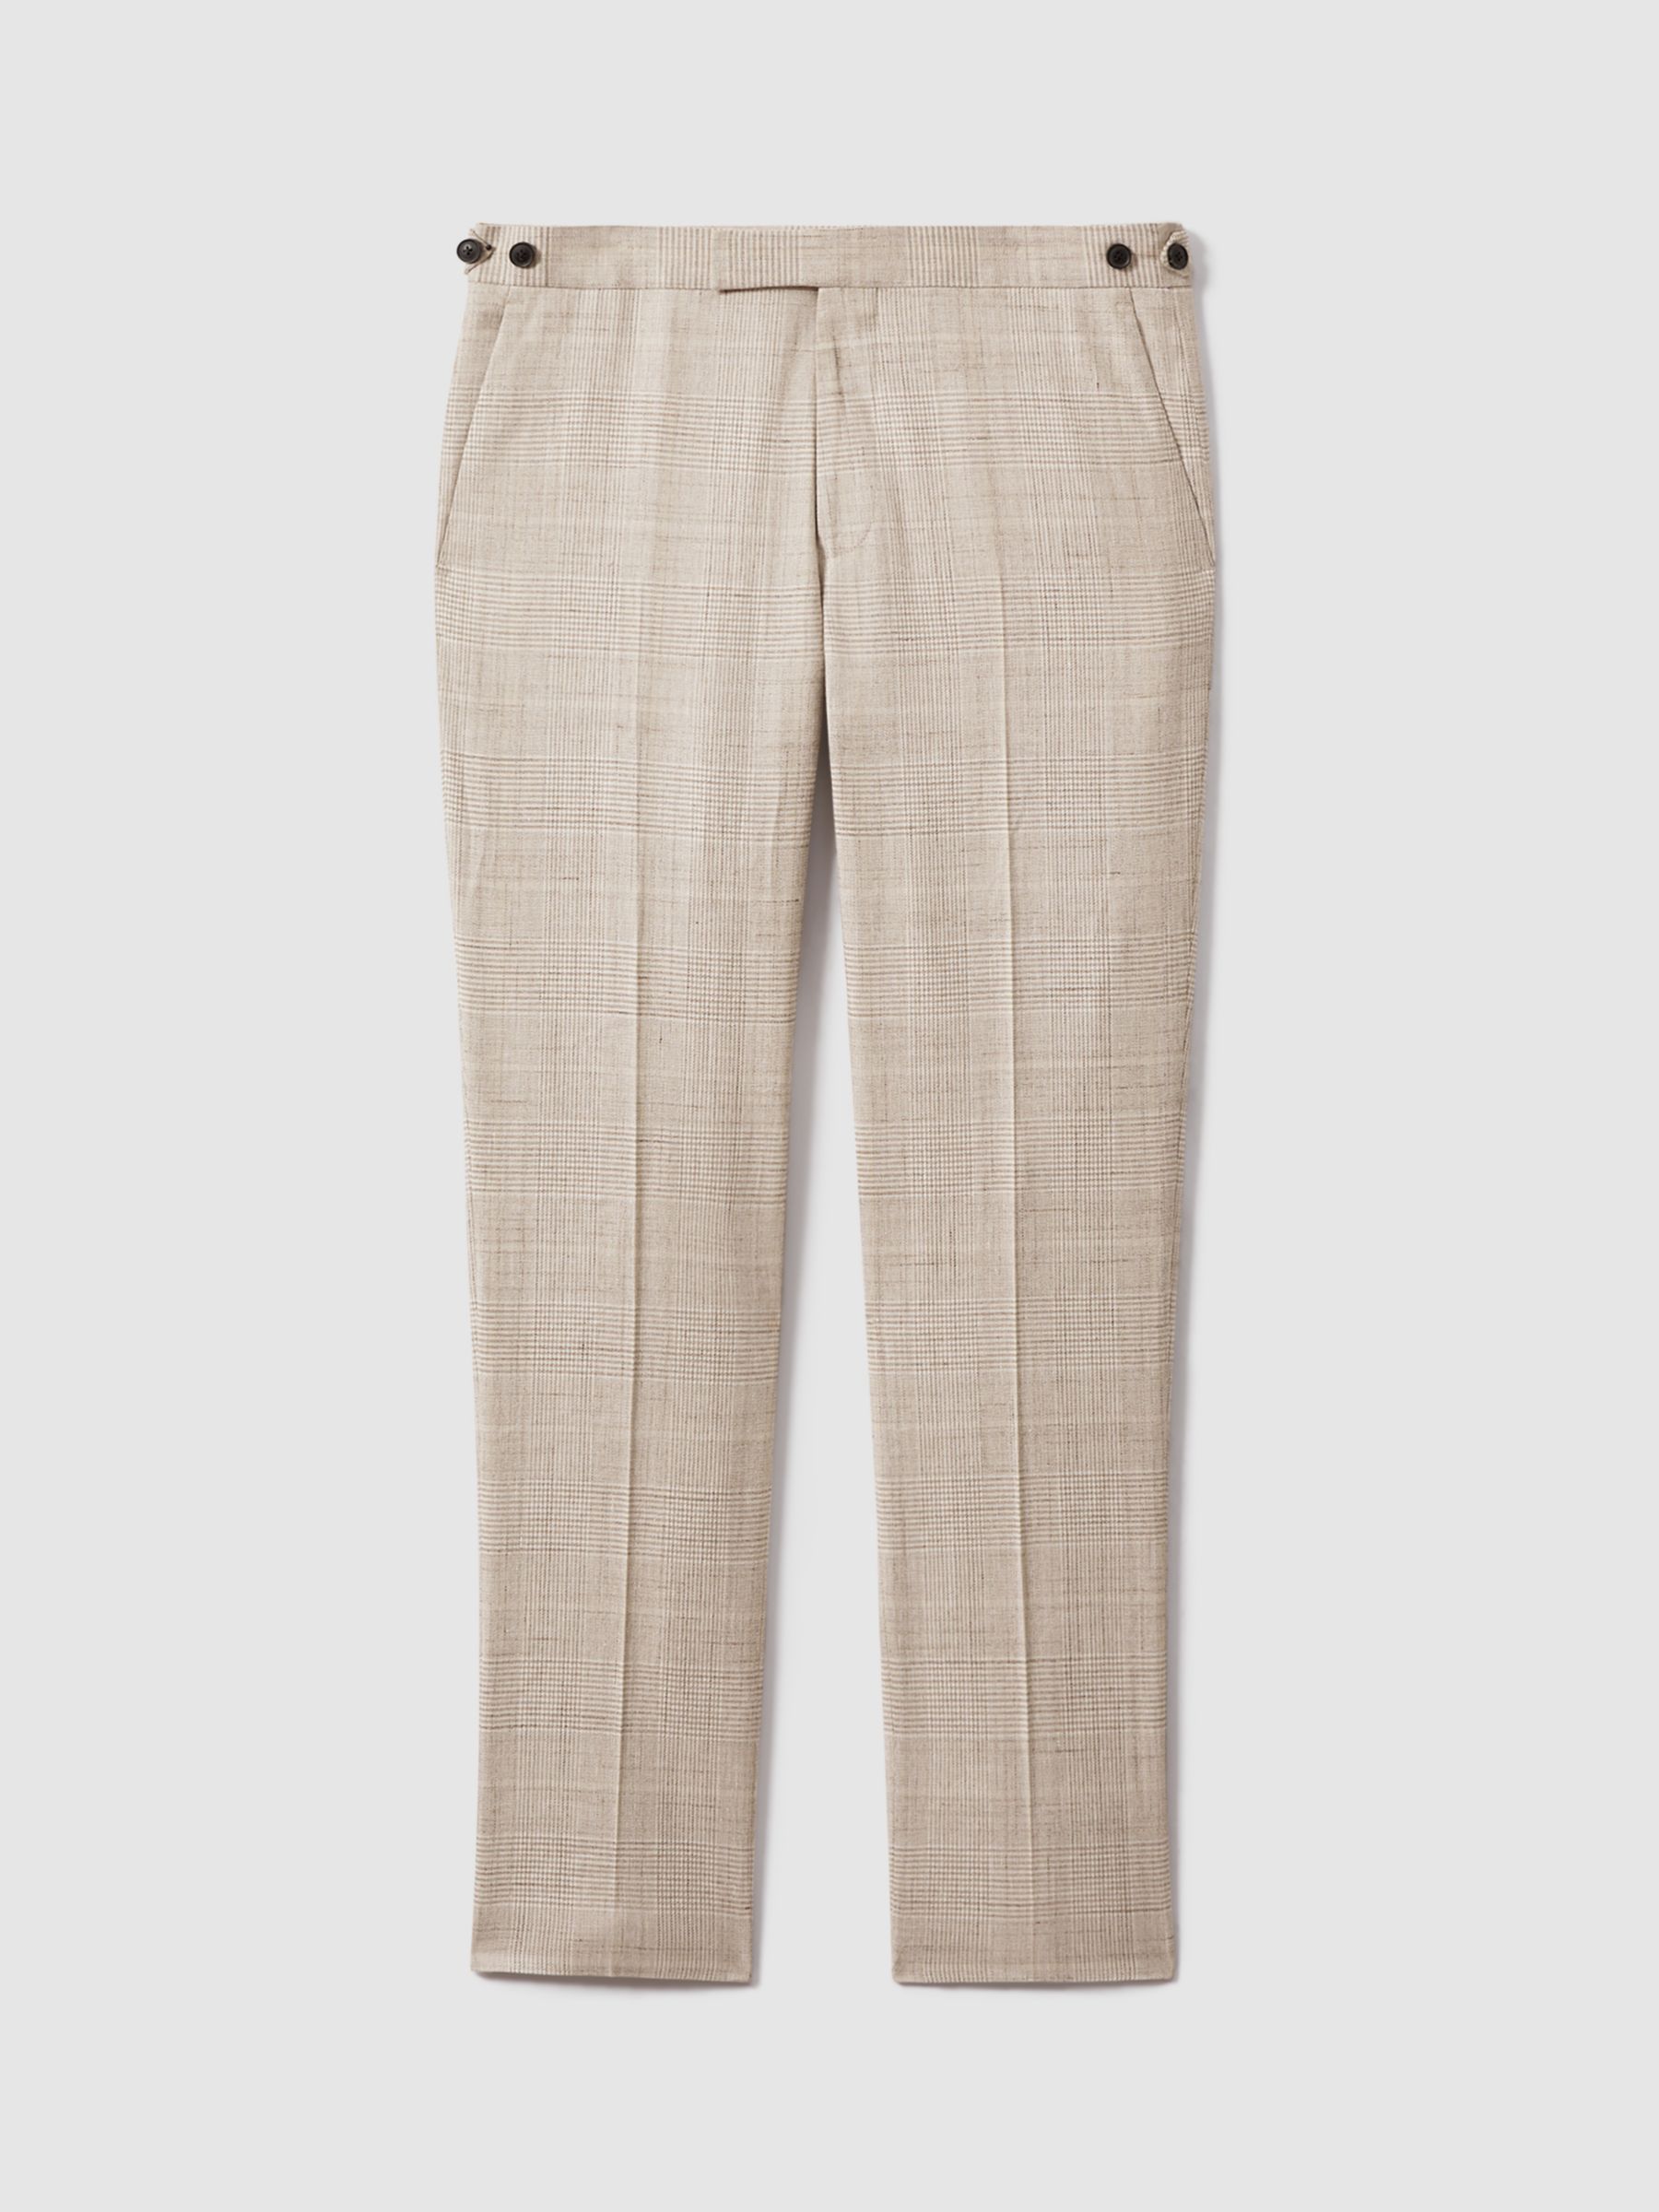 Reiss Boxhill Linen Blend Suit Trousers, Oatmeal, 28R